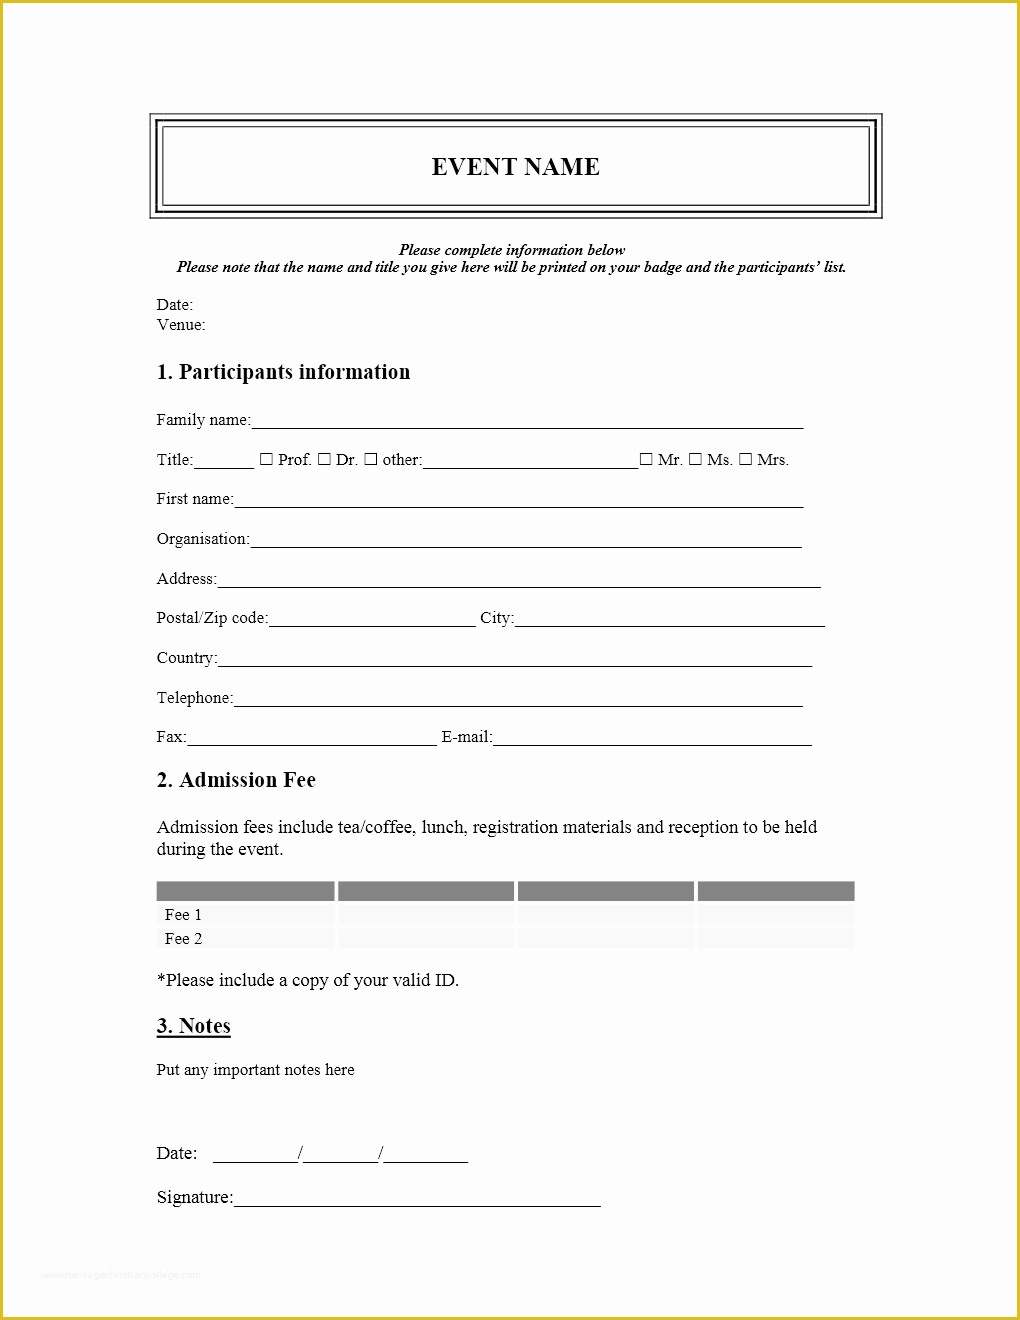 Registration form Template Word Free Download Of event Registration form